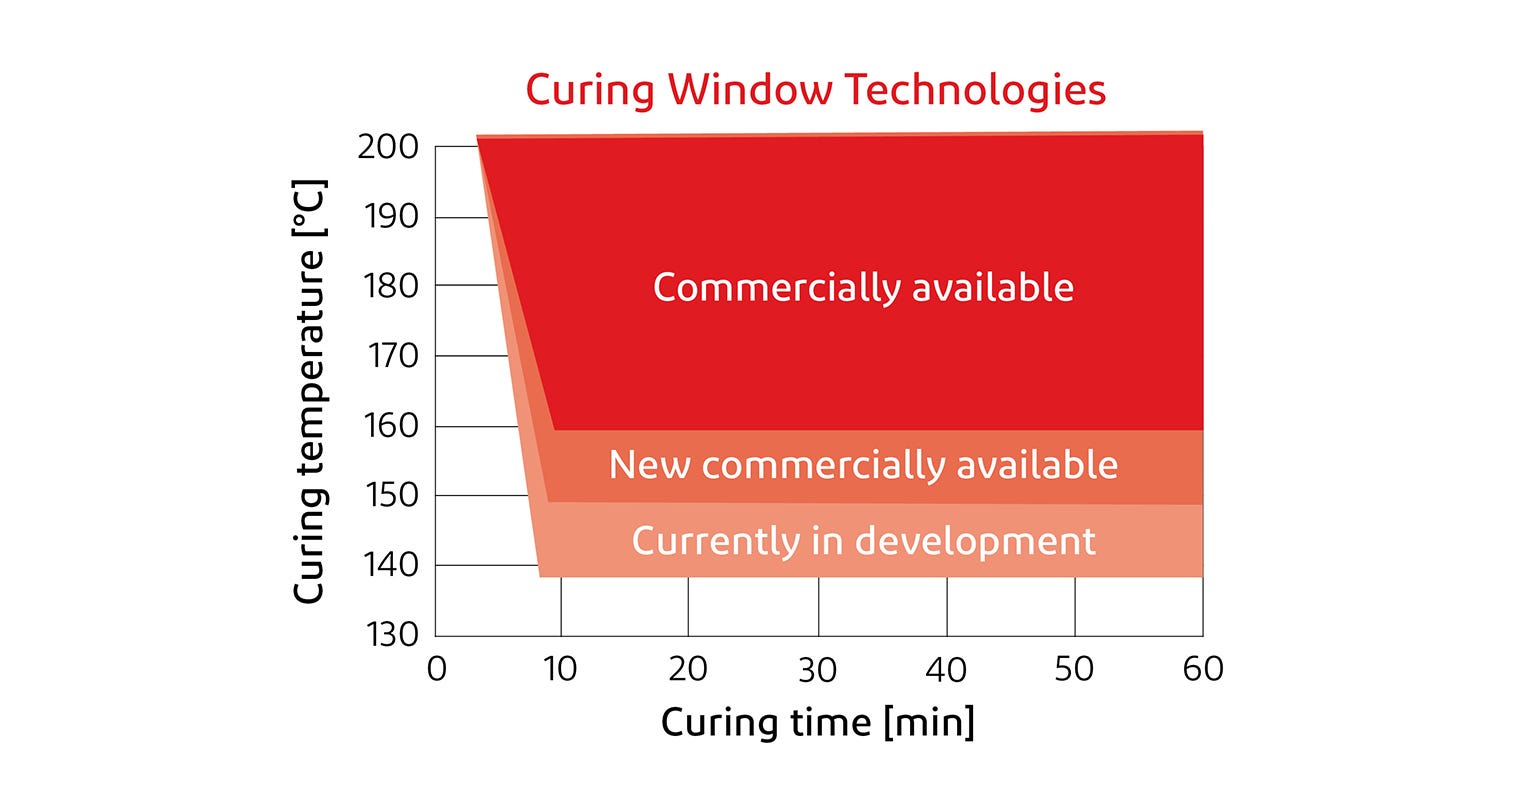 Curing window technologies